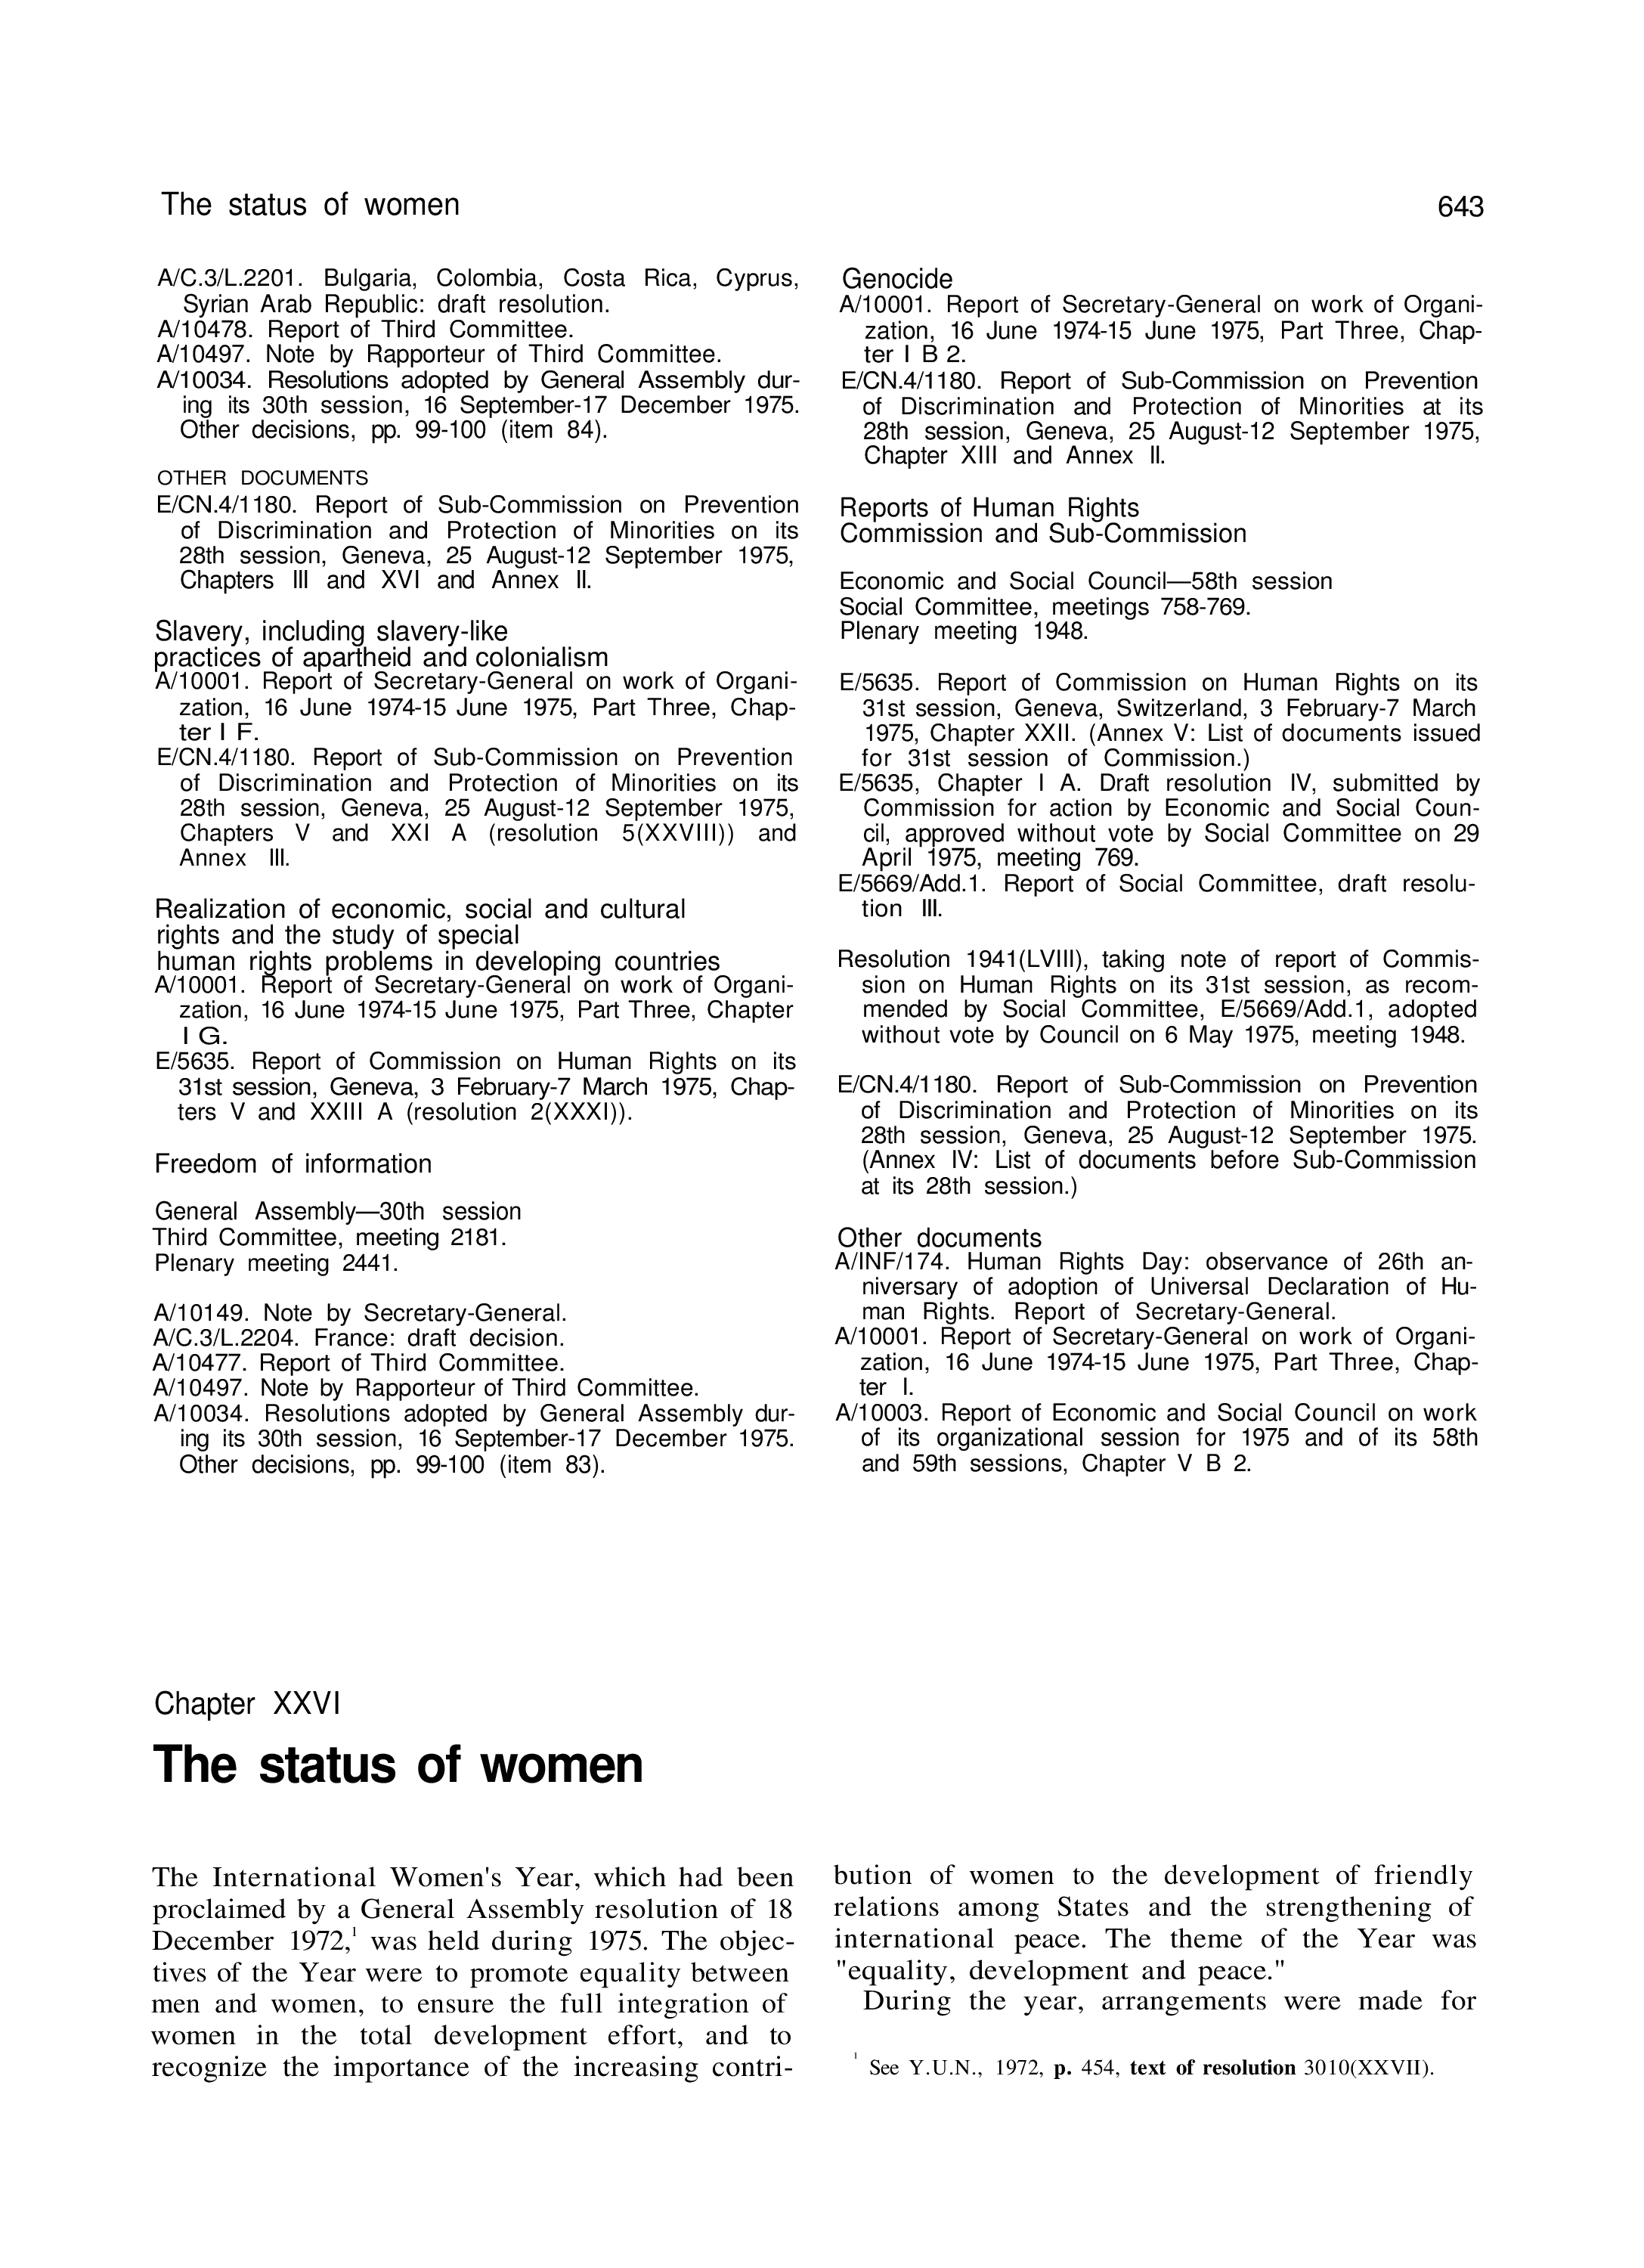 YUN Volume_Page 1975_653